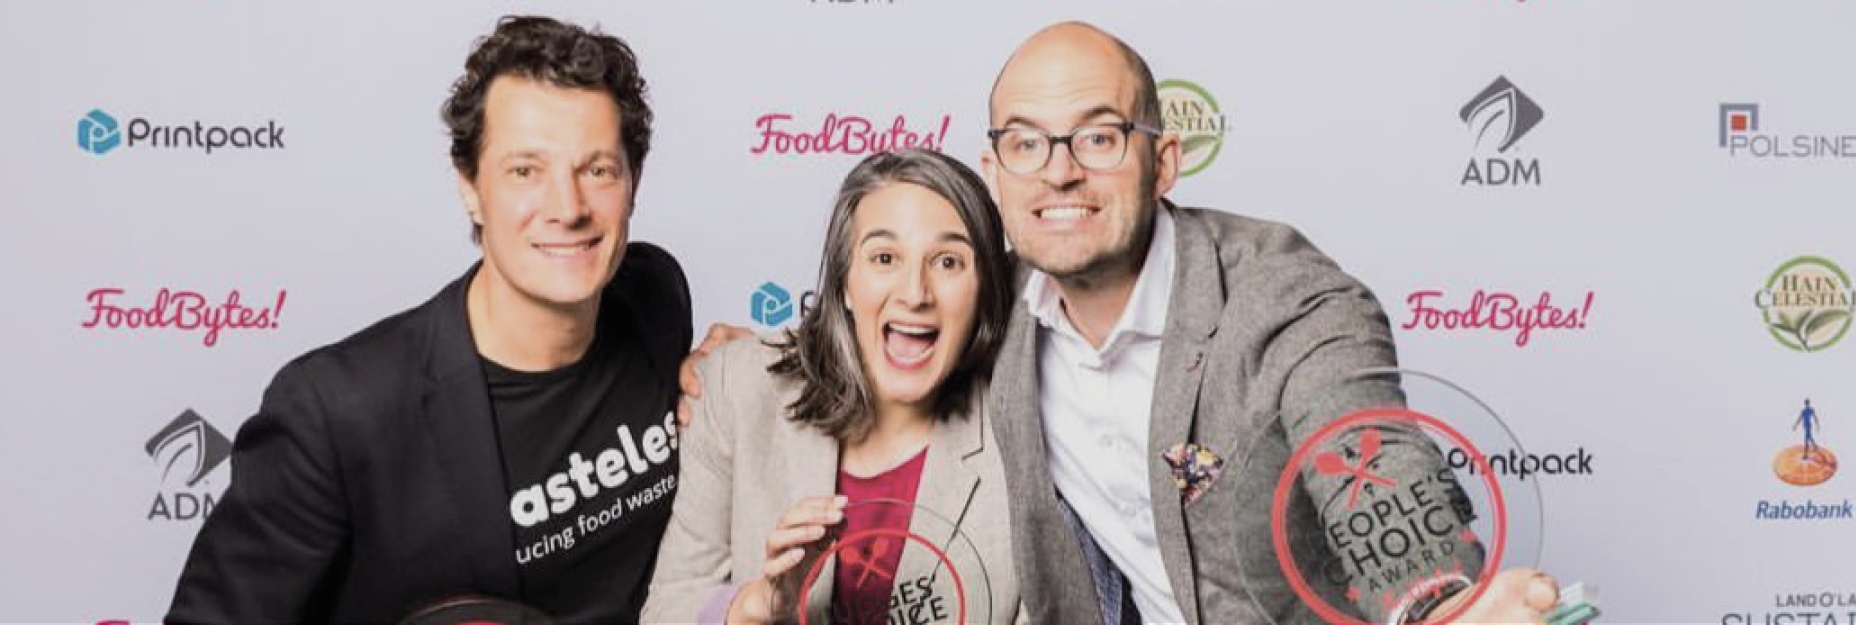 Winnow Wins People’s Choice Award at Foodbytes NYC